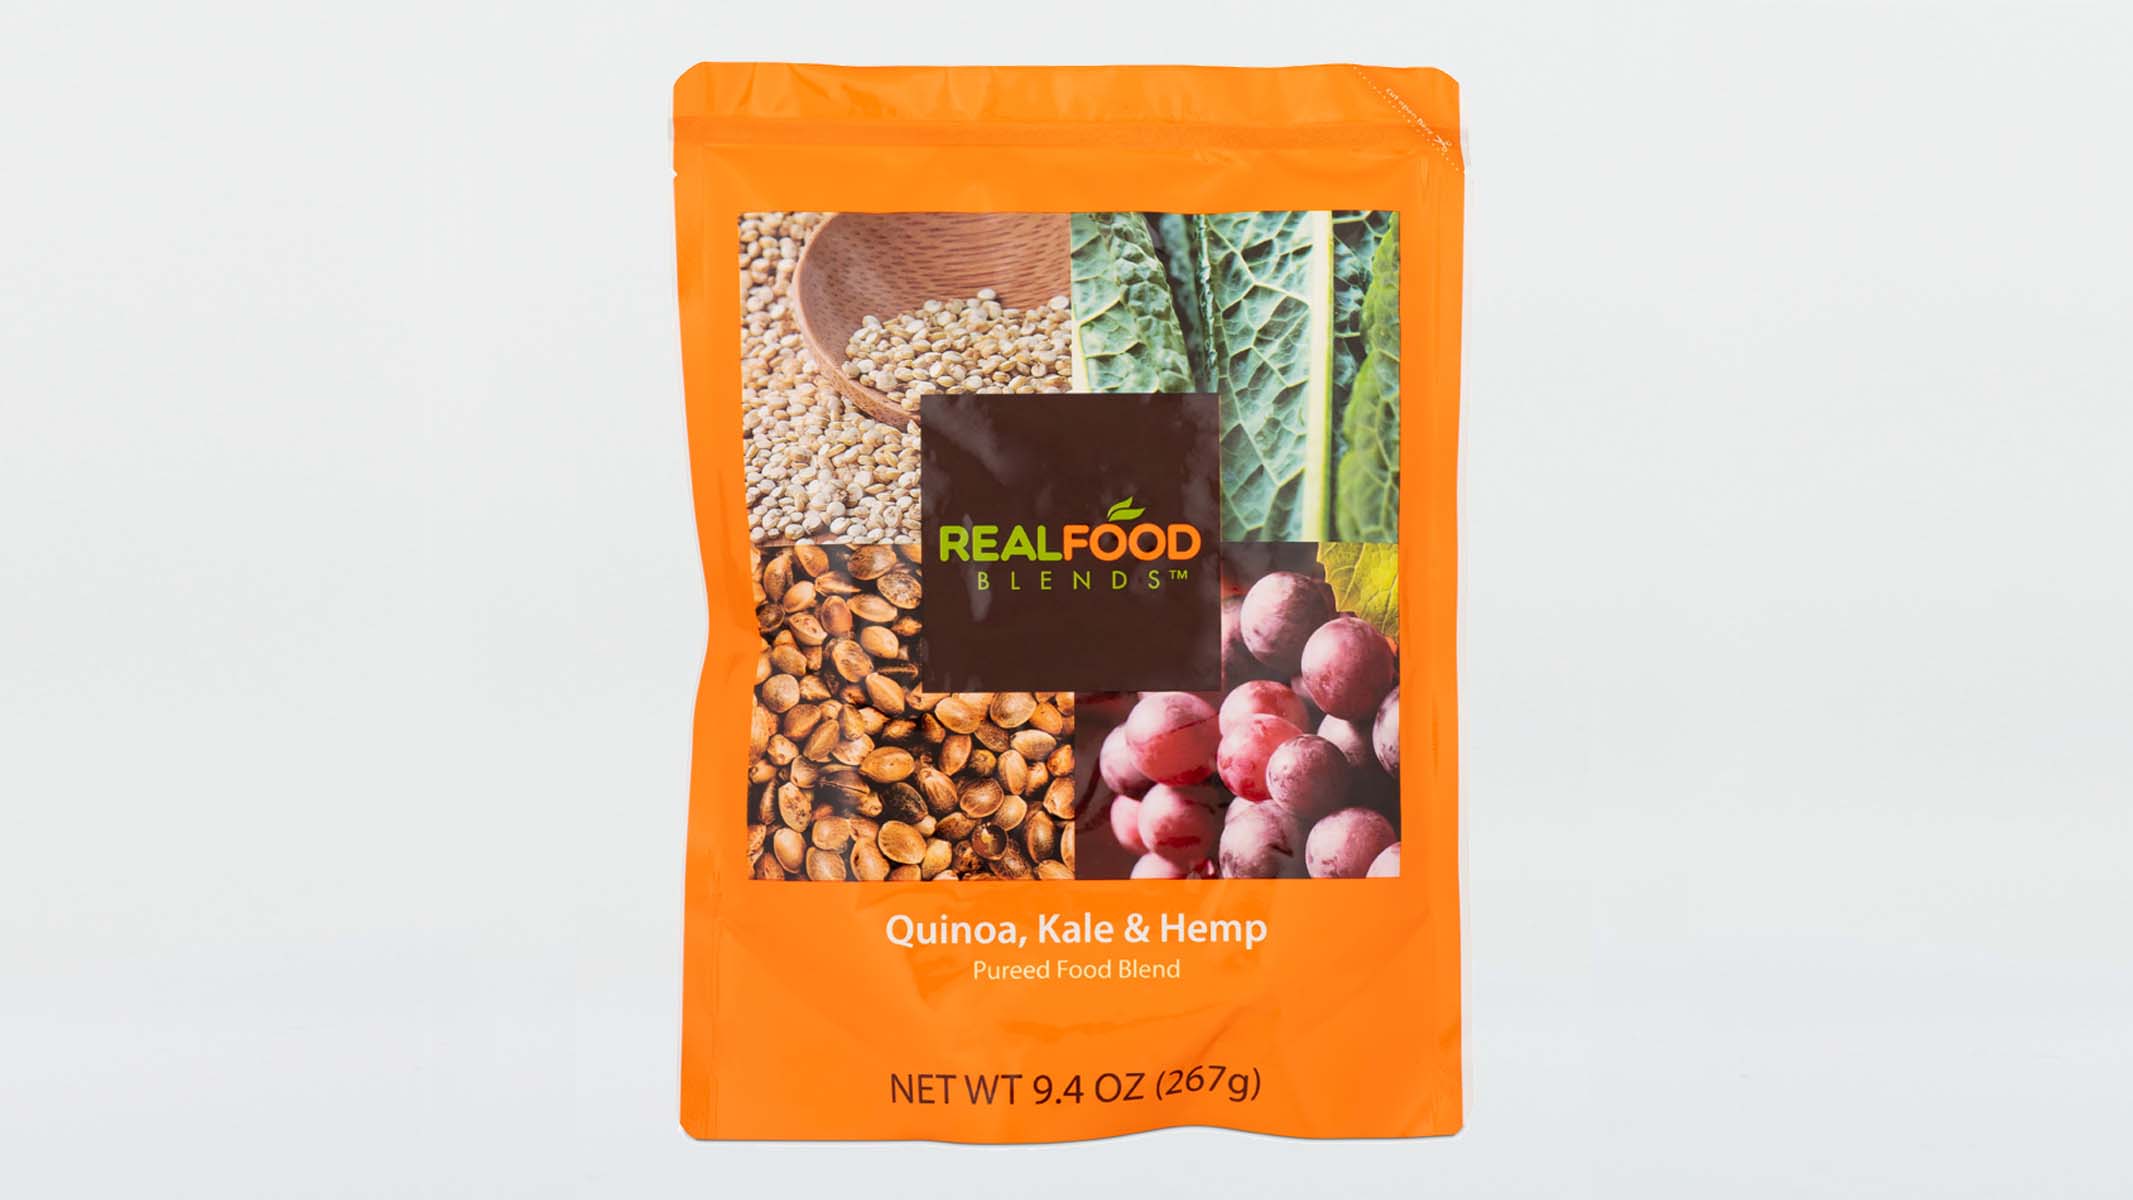 Real food blends quinoa kale hemp rentals Orlando FL  Where to rent real  food blends quinoa kale hemp in Orlando, Kissimmee, Sanford FL, Winter  Garden, Lake Mary, Oviedo, Central Florida